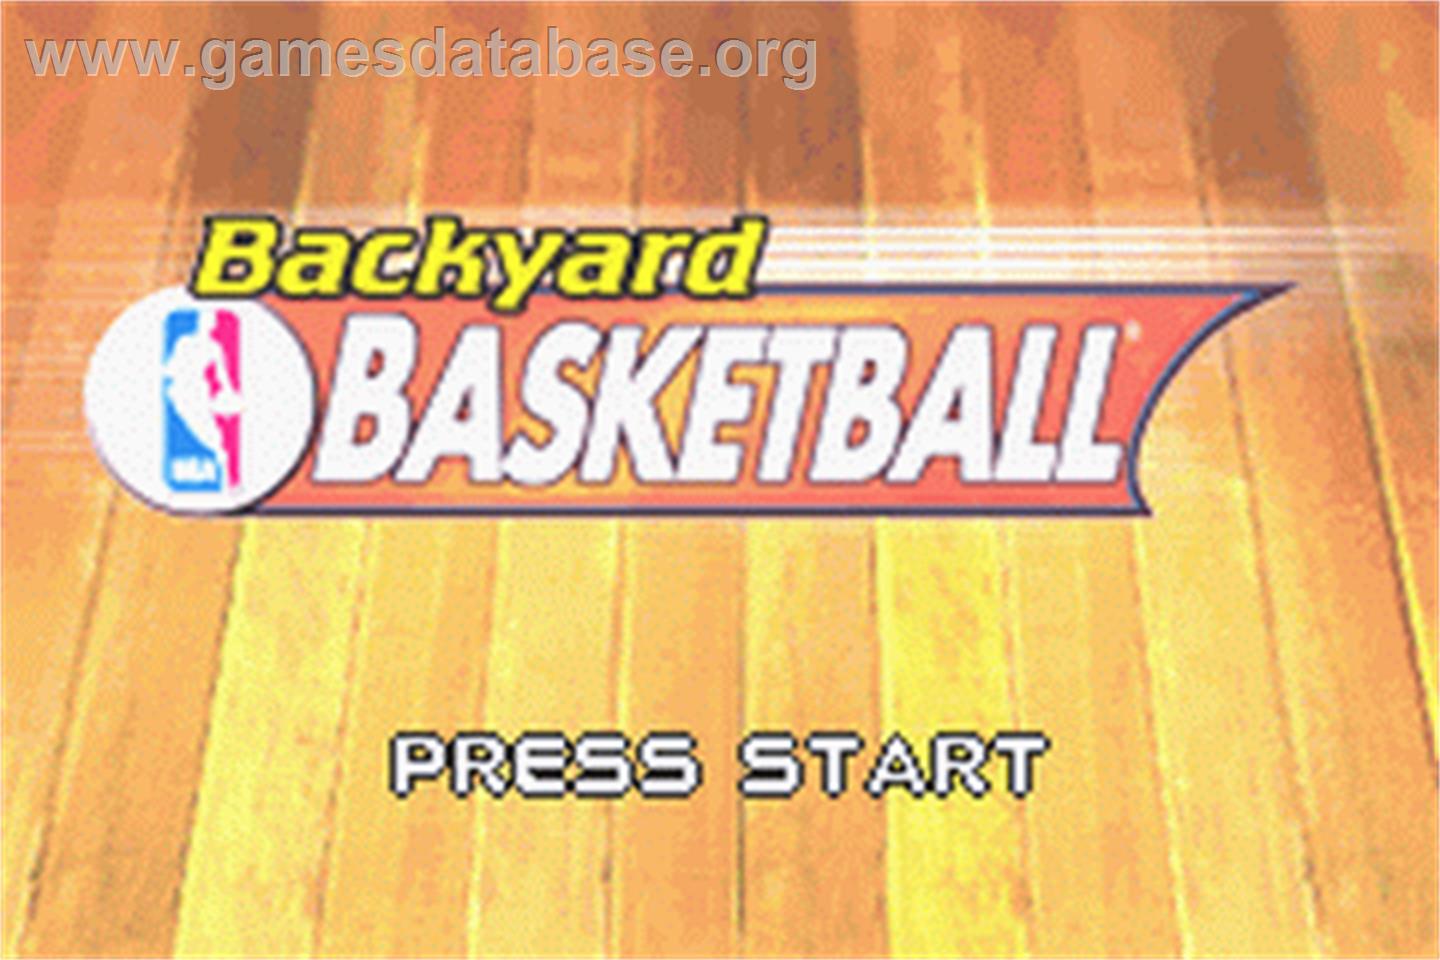 Backyard Basketball - Nintendo Game Boy Advance - Artwork - Title Screen